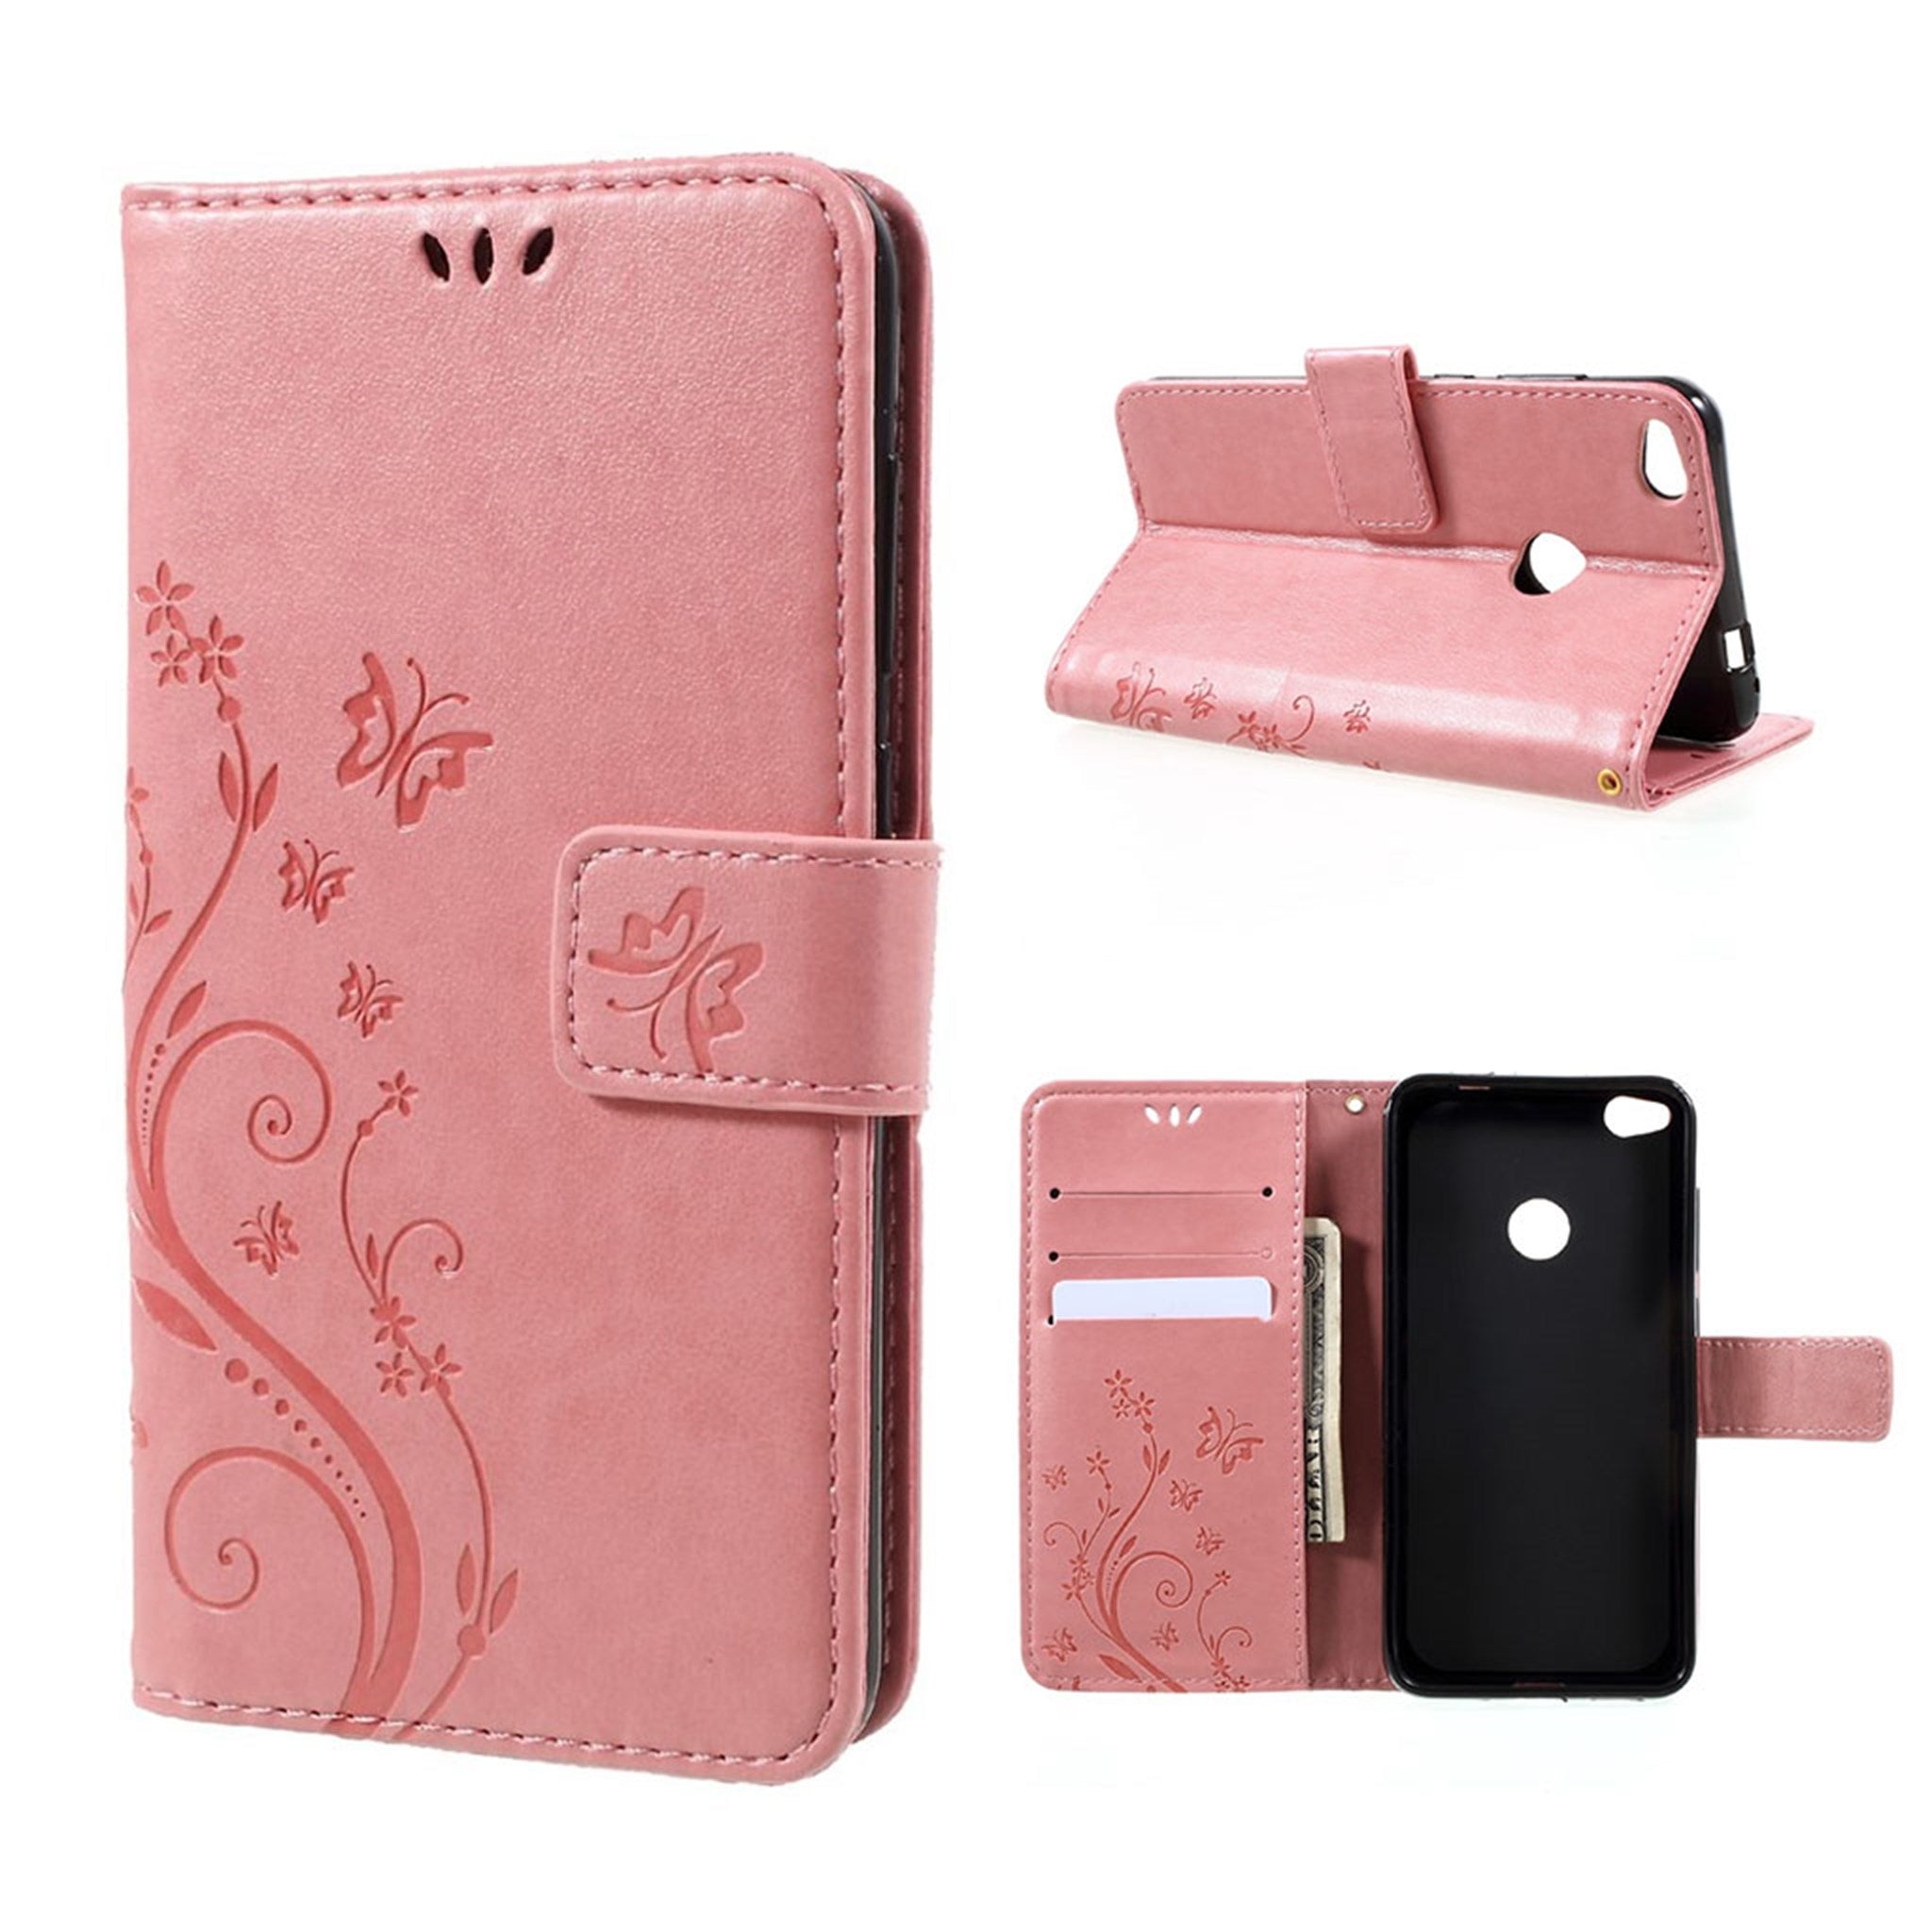 Huawei Honor 8 Lite imprinted butterflies leather flip case - Pink